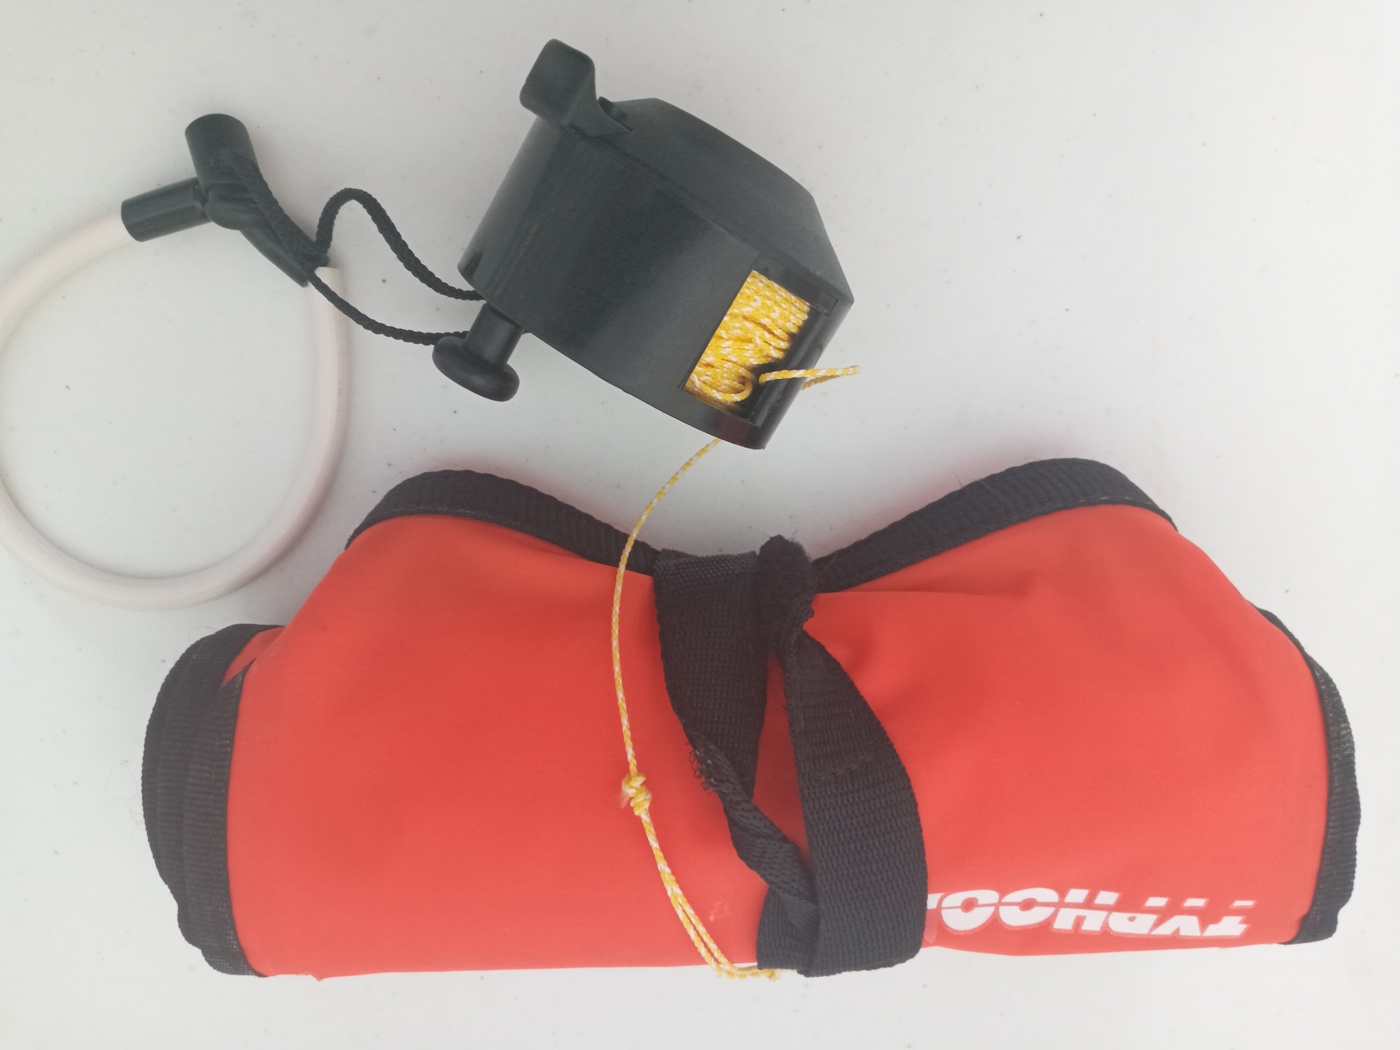 SMB and pocket reel for scuba diving - ecay